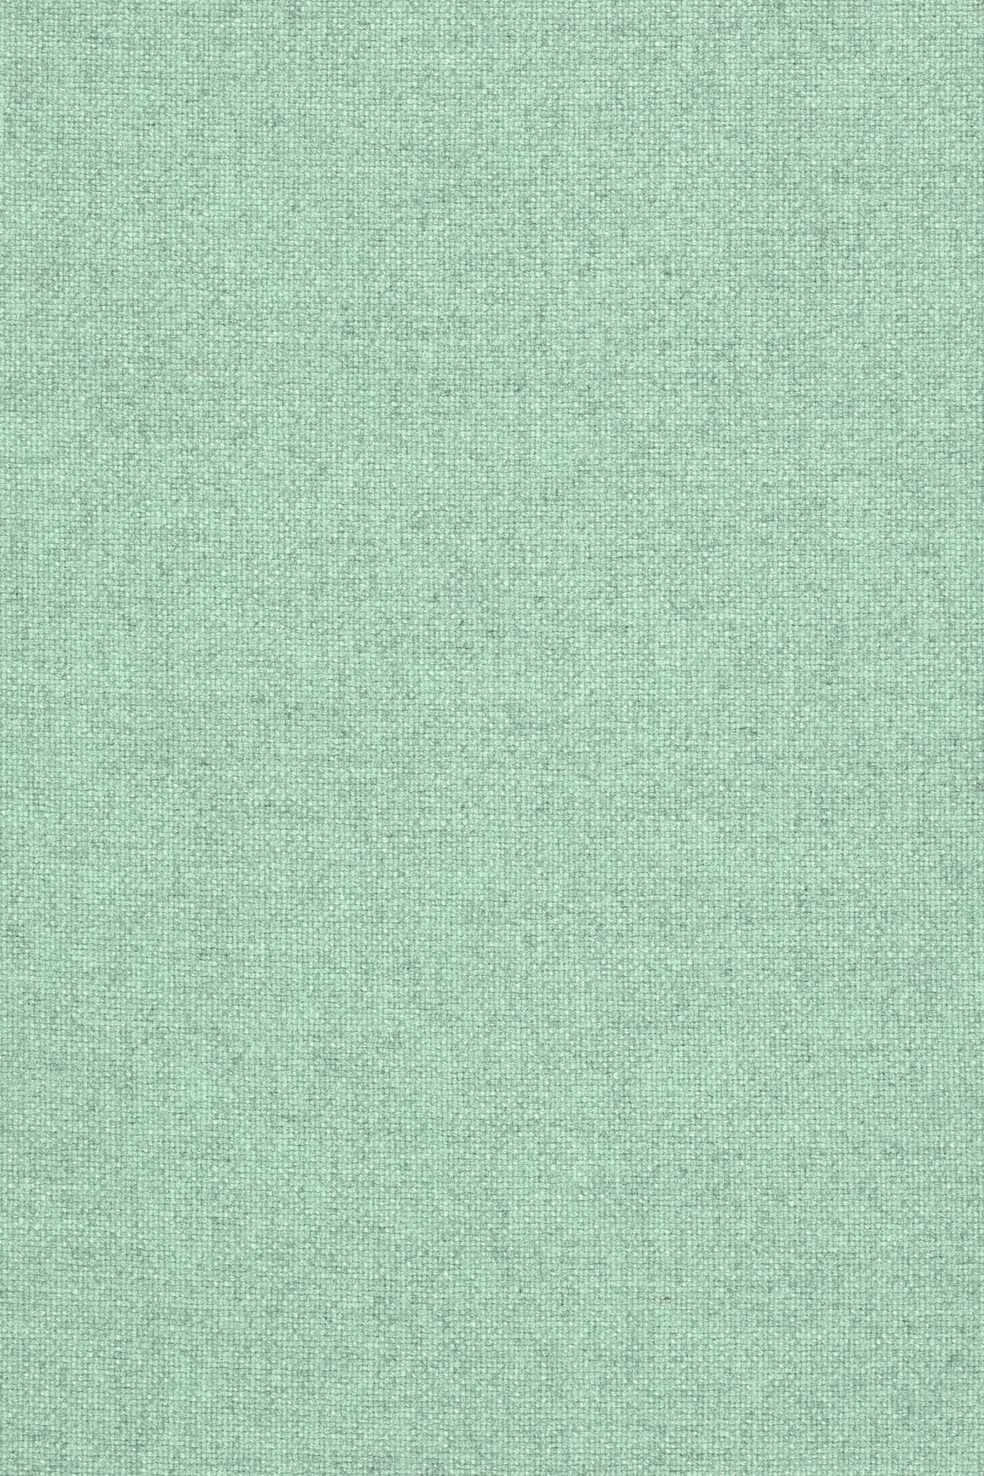 Fabric sample Tonica 2 923 green